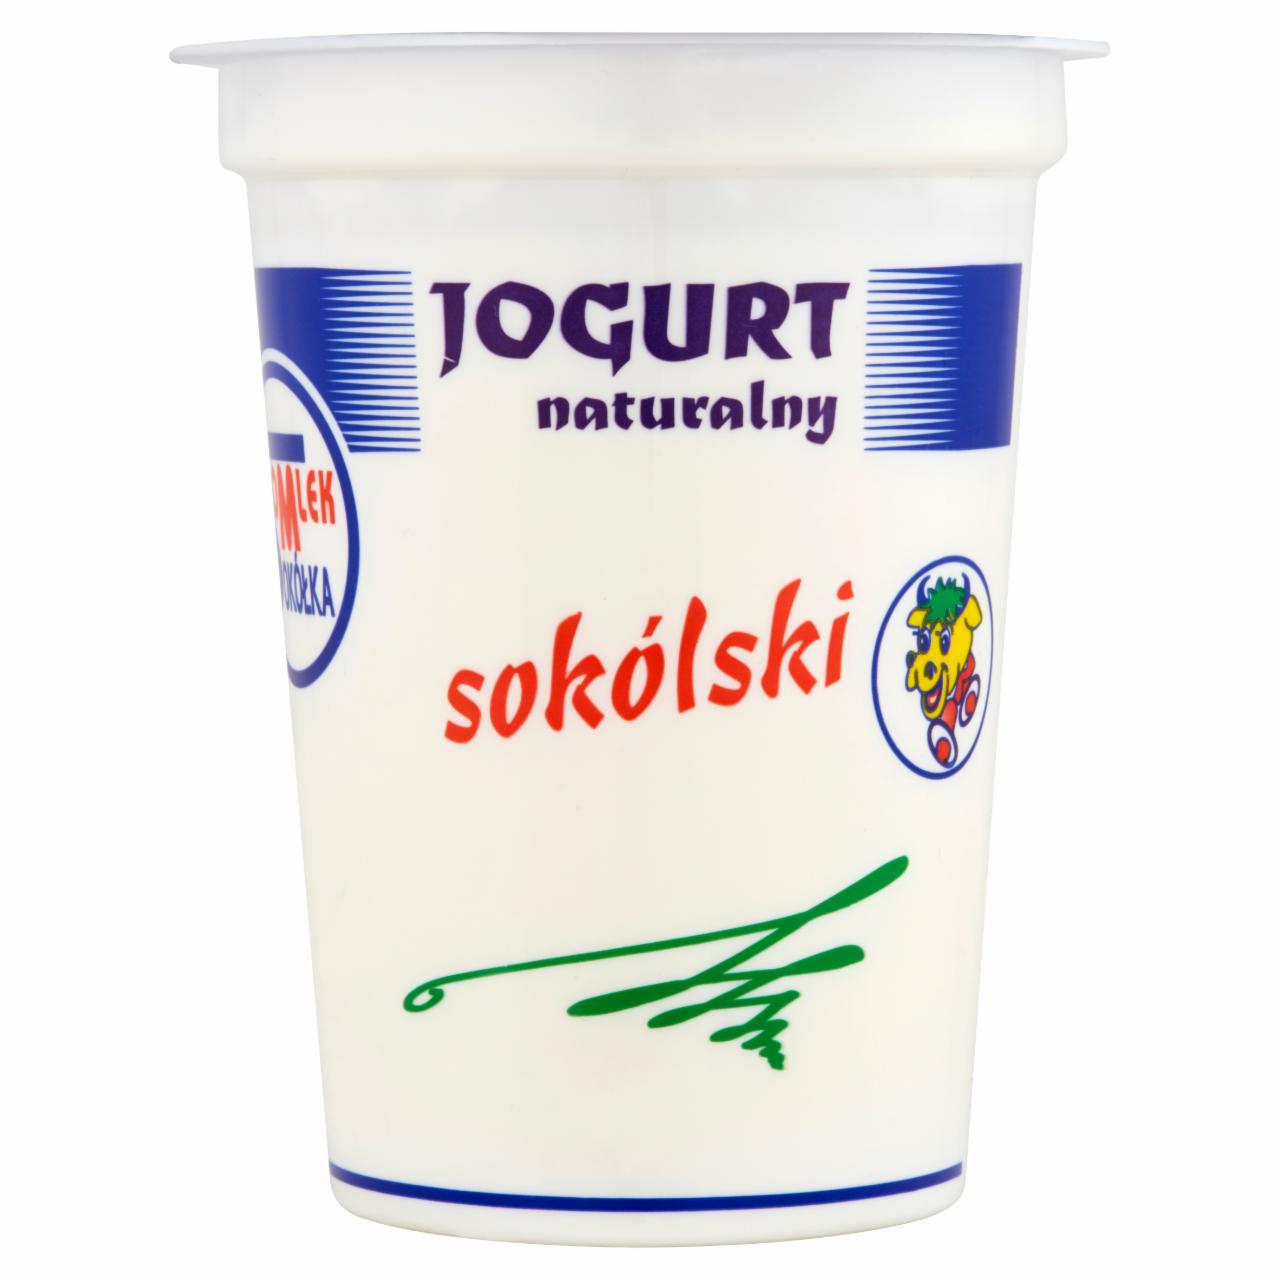 Zdjęcia - Jogurt naturalny sokólski 400 g